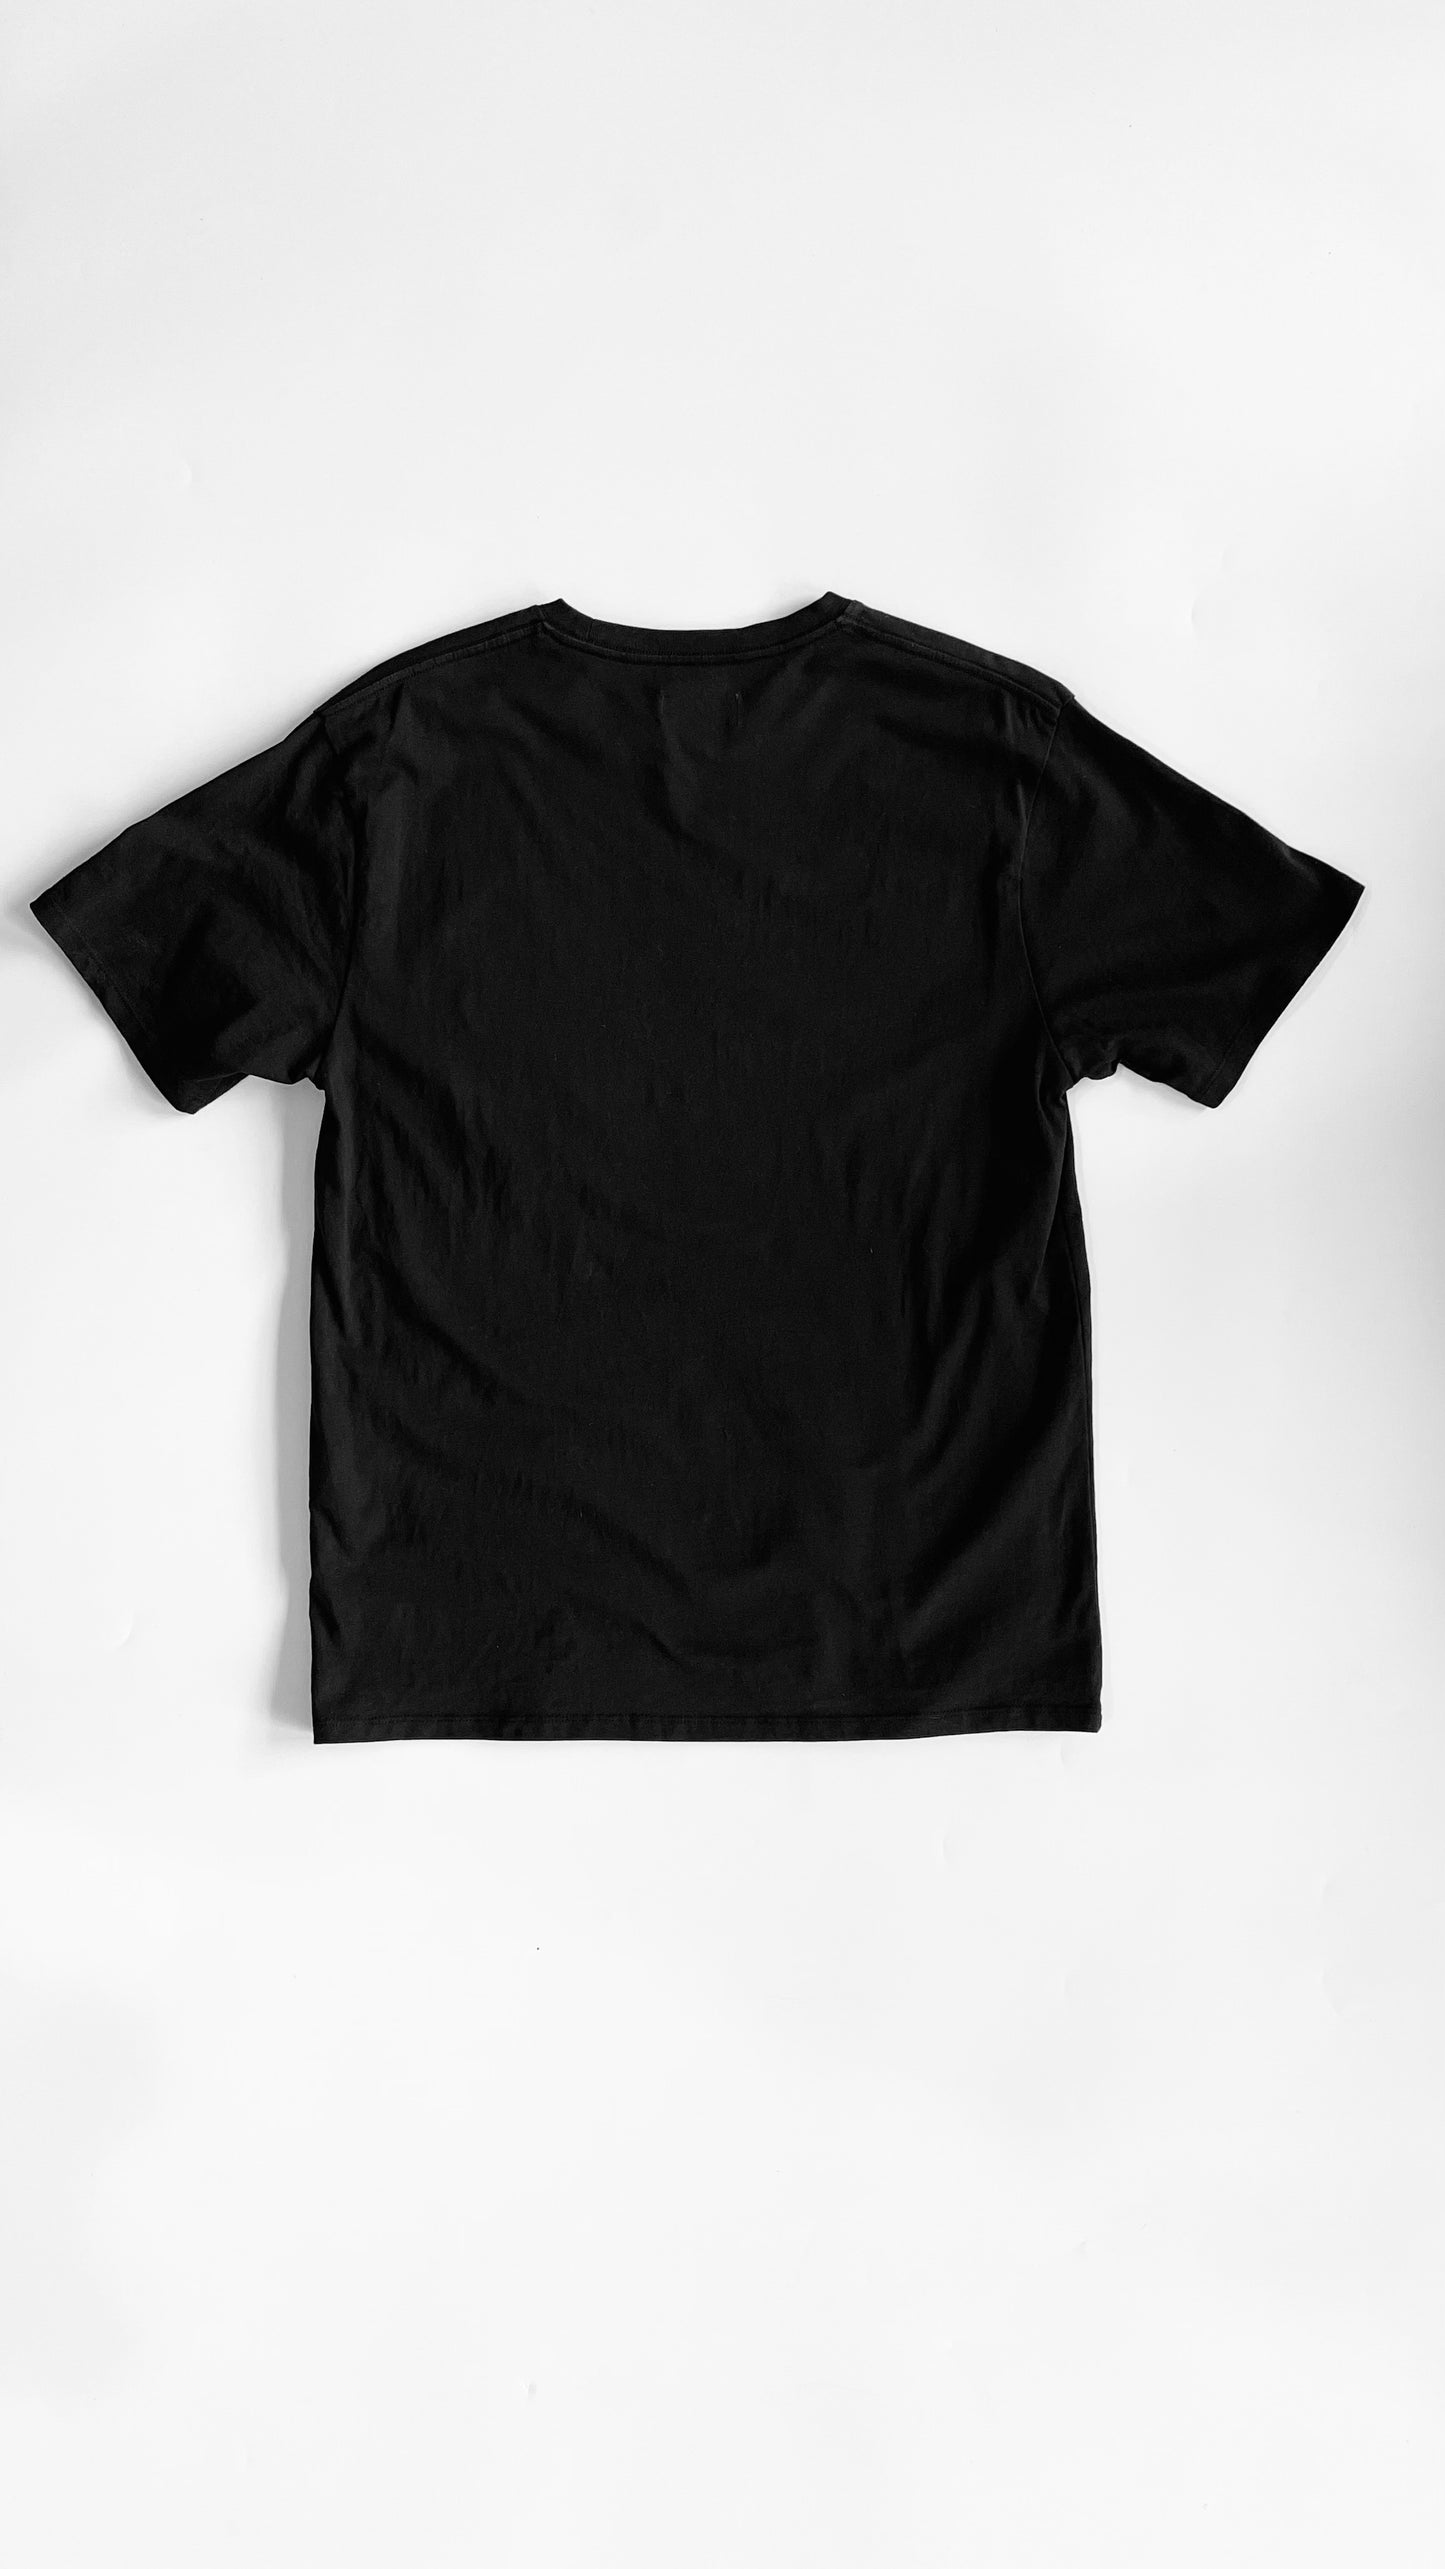 Pre-Loved Saturdays Surf NYC black t-shirt - Size M